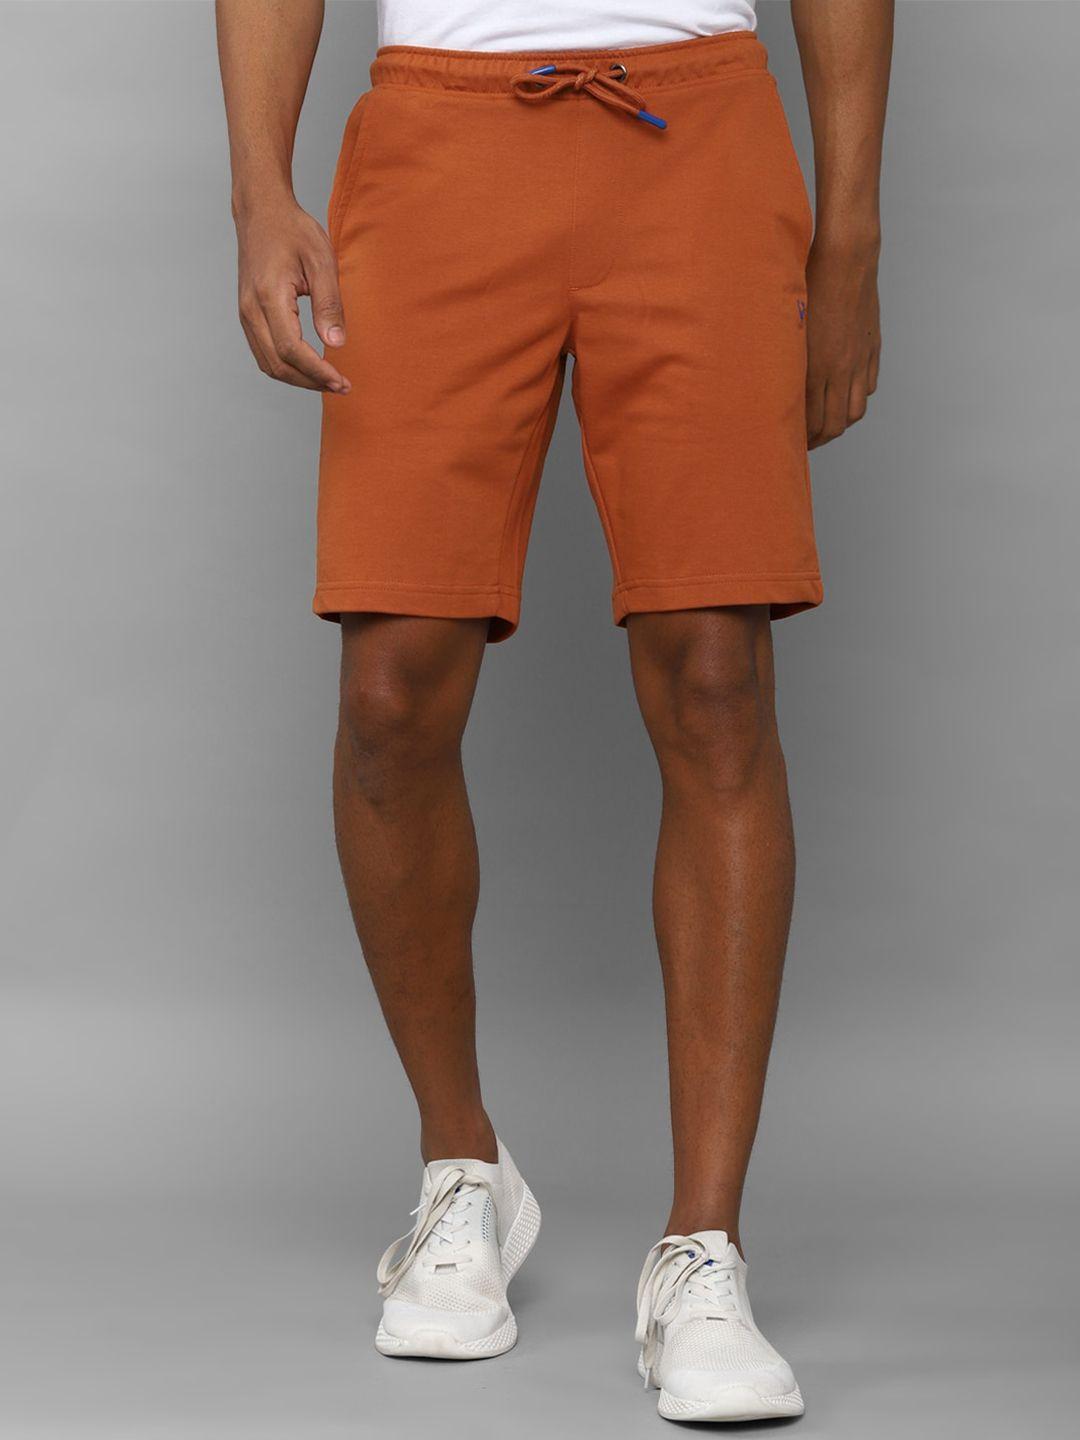 allen solly men orange slim fit shorts